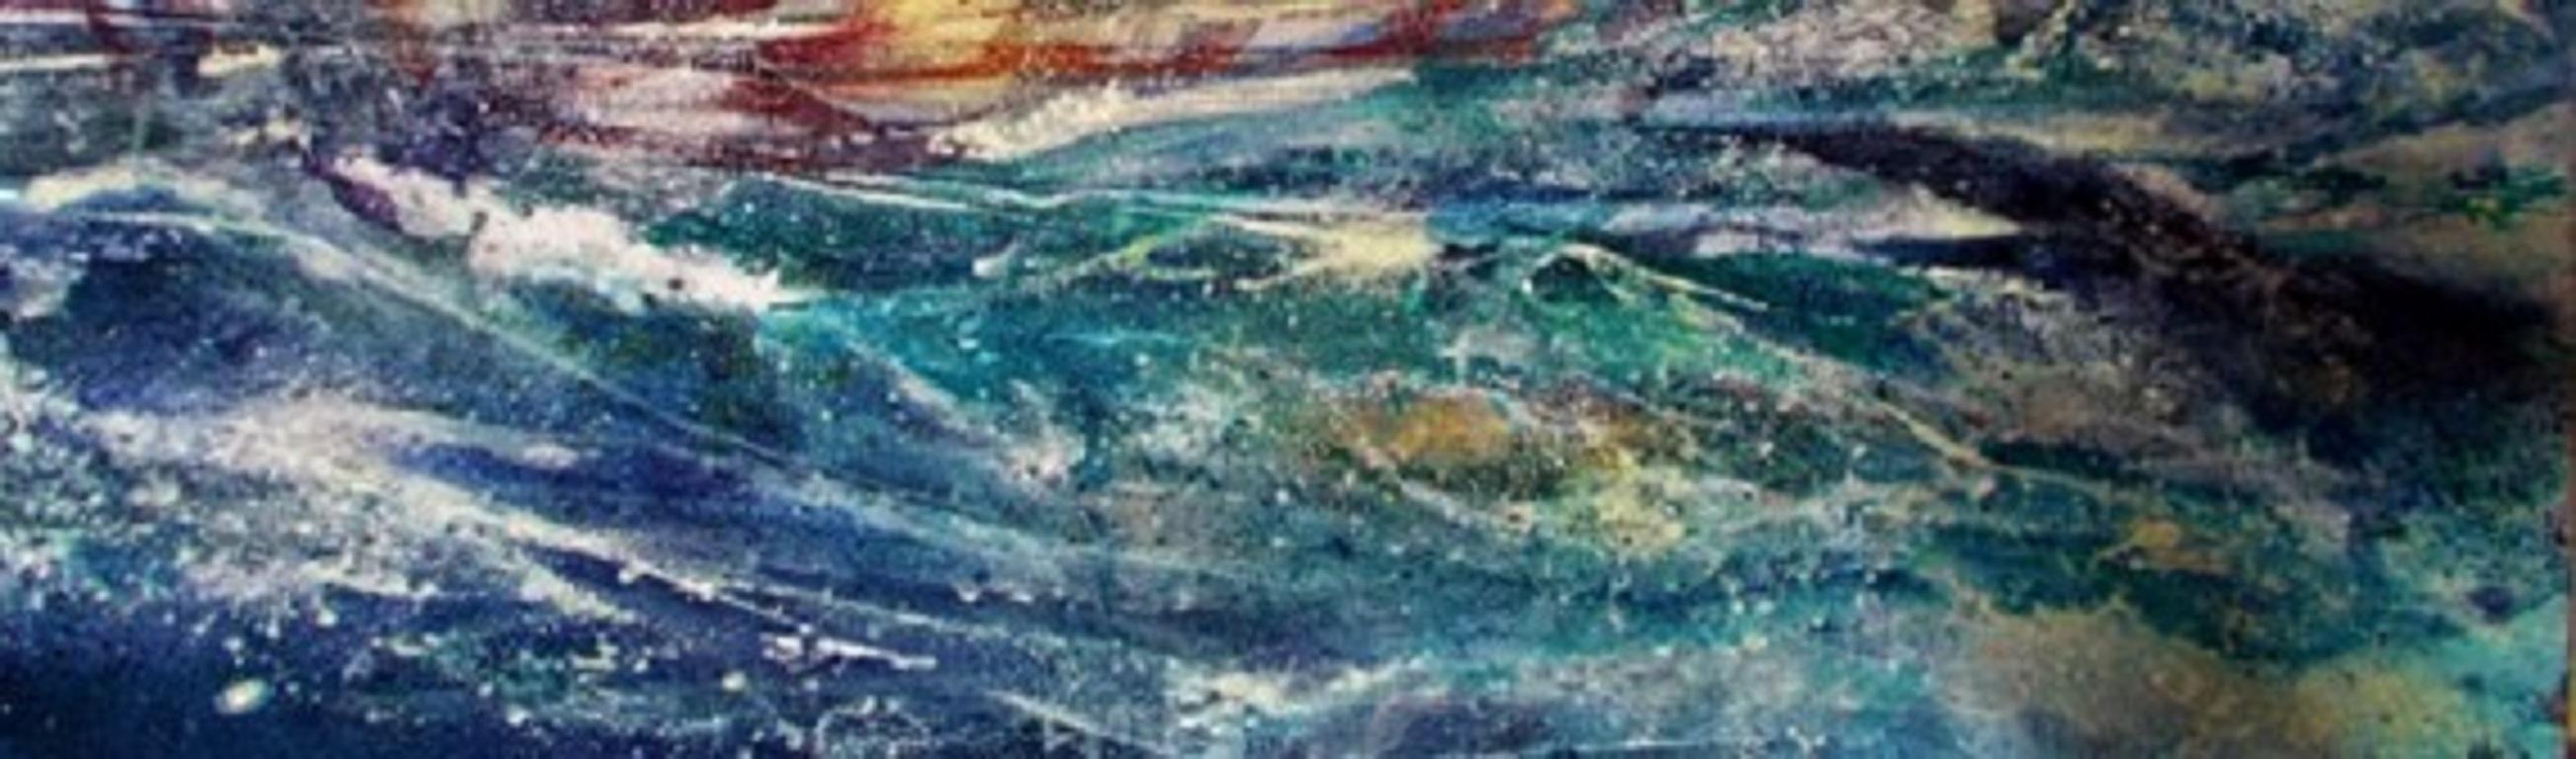 Gerard tunney, Downstream, Original seascape painting - Contemporary Painting by Gerard Tunney